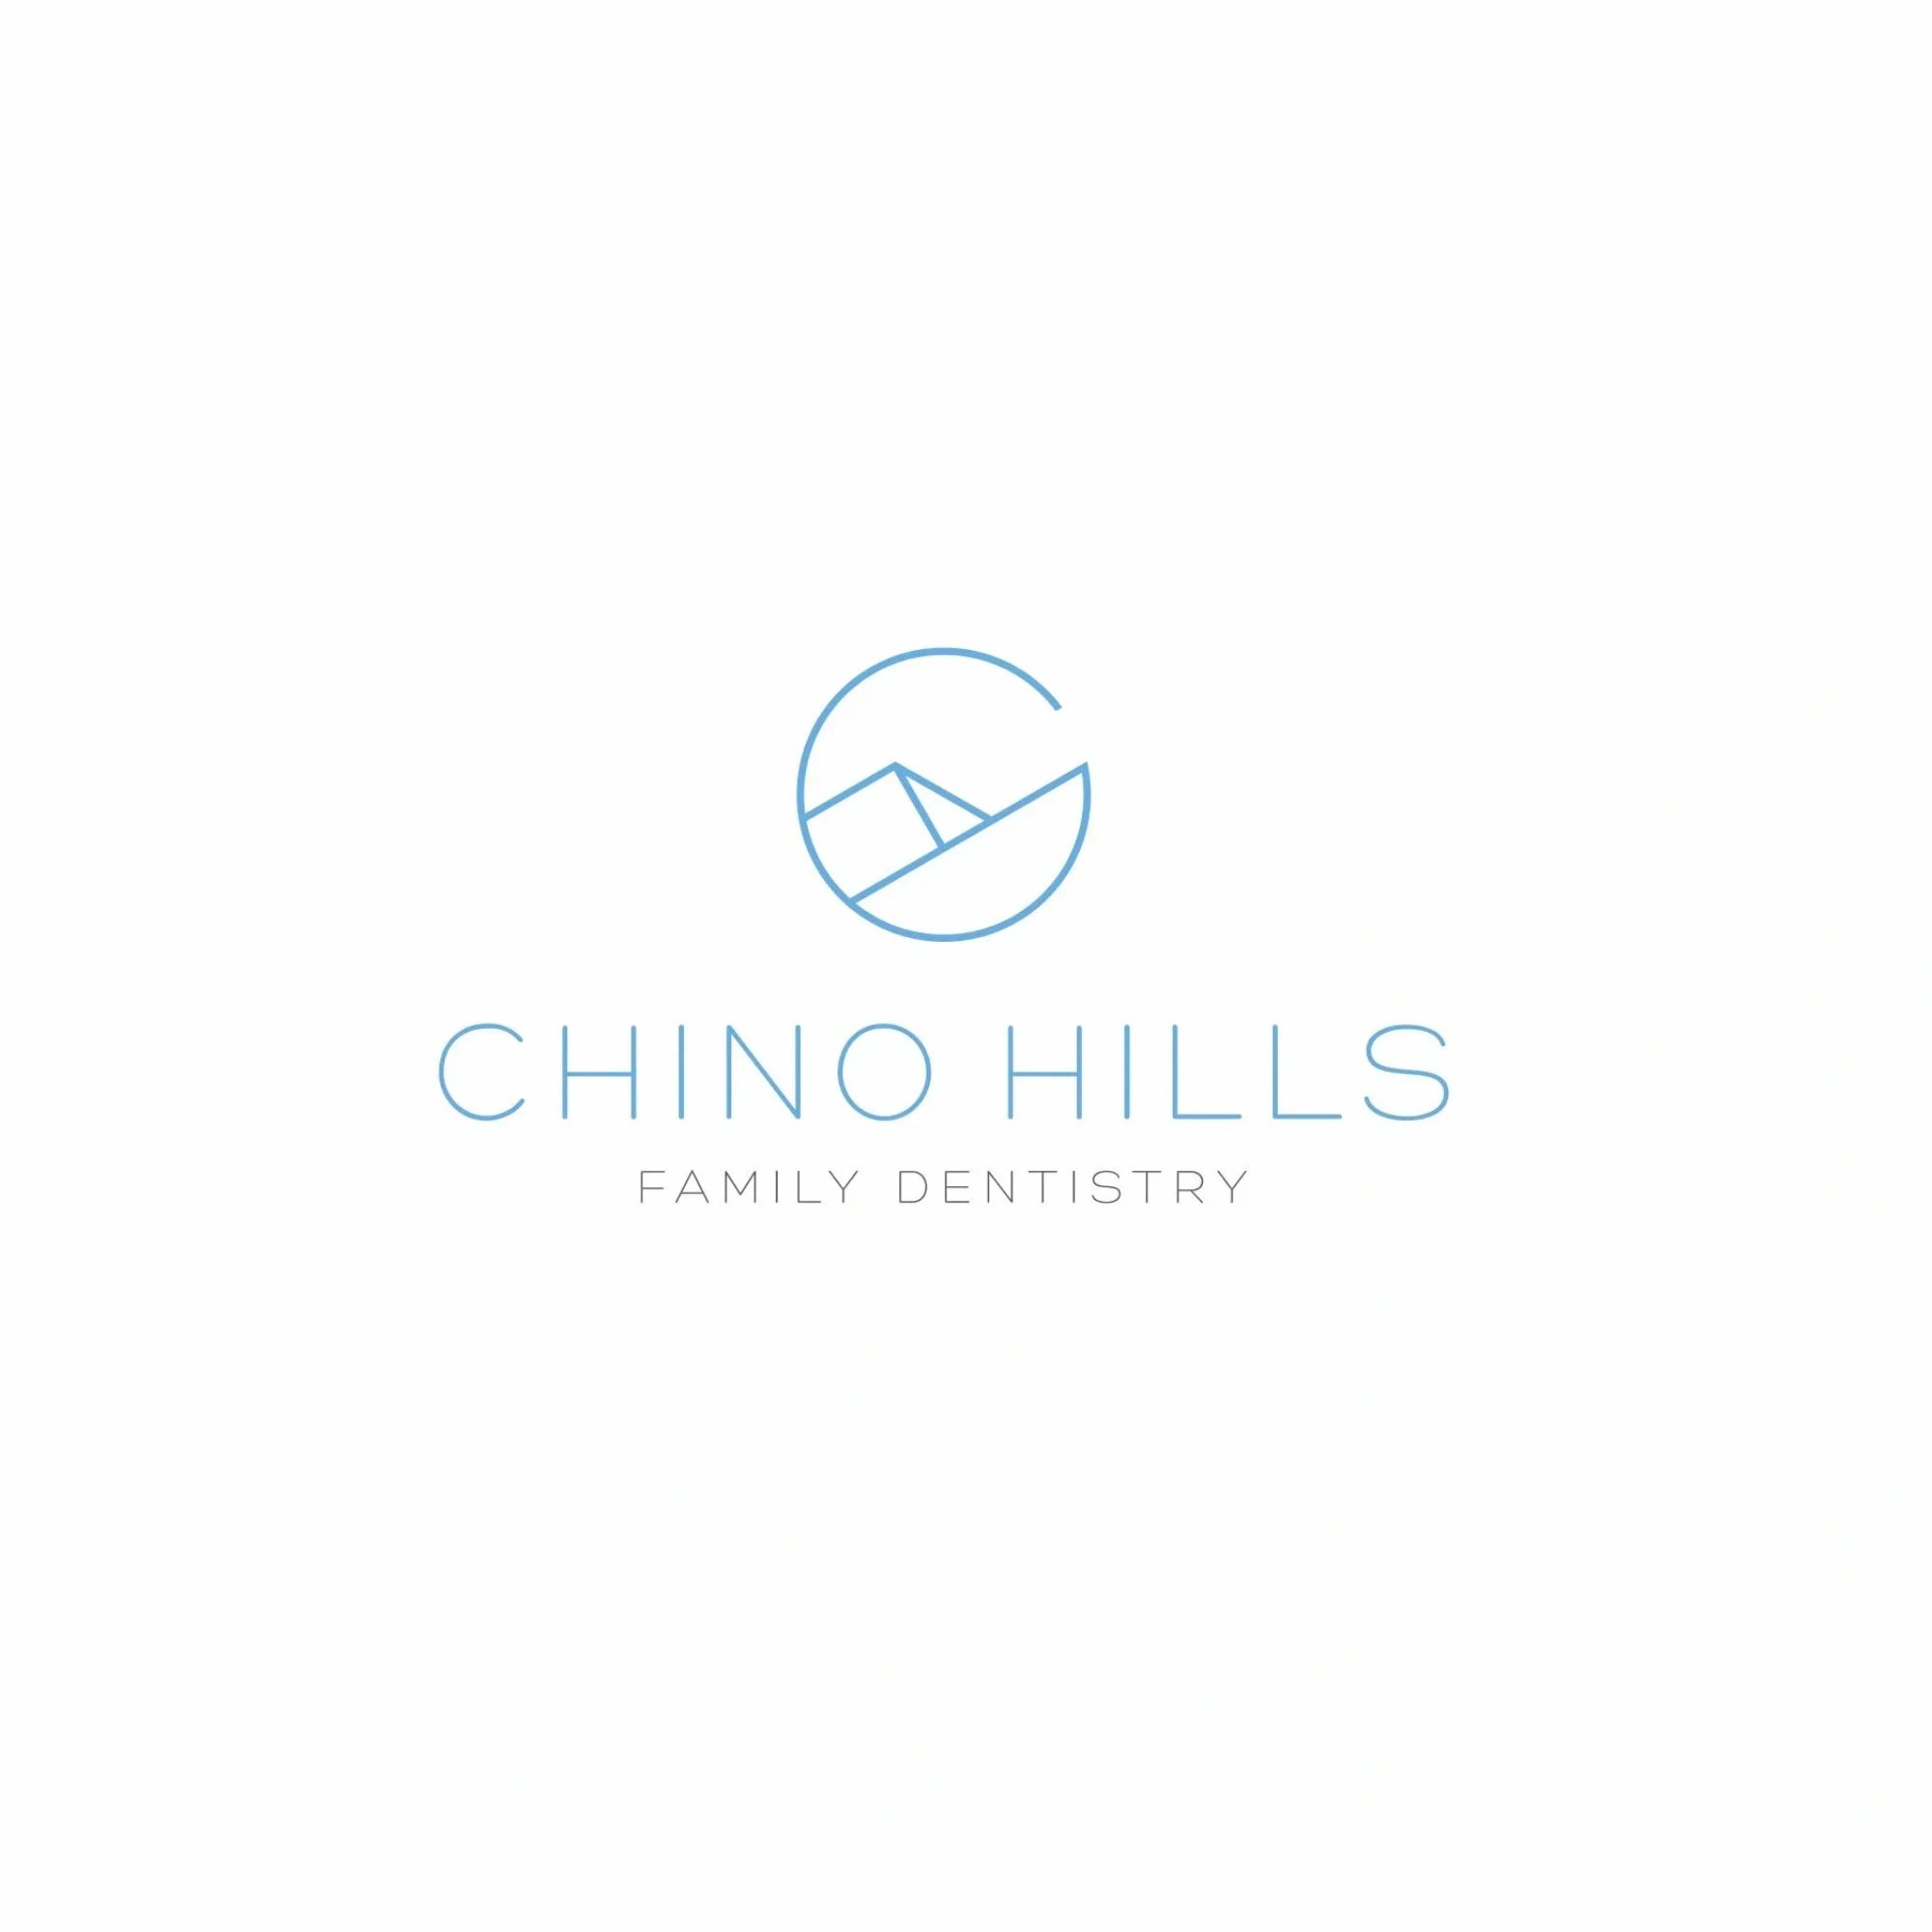 CHINO HILLS FAMILY DENTISTRY - Veneers, Implants, Crowns ...